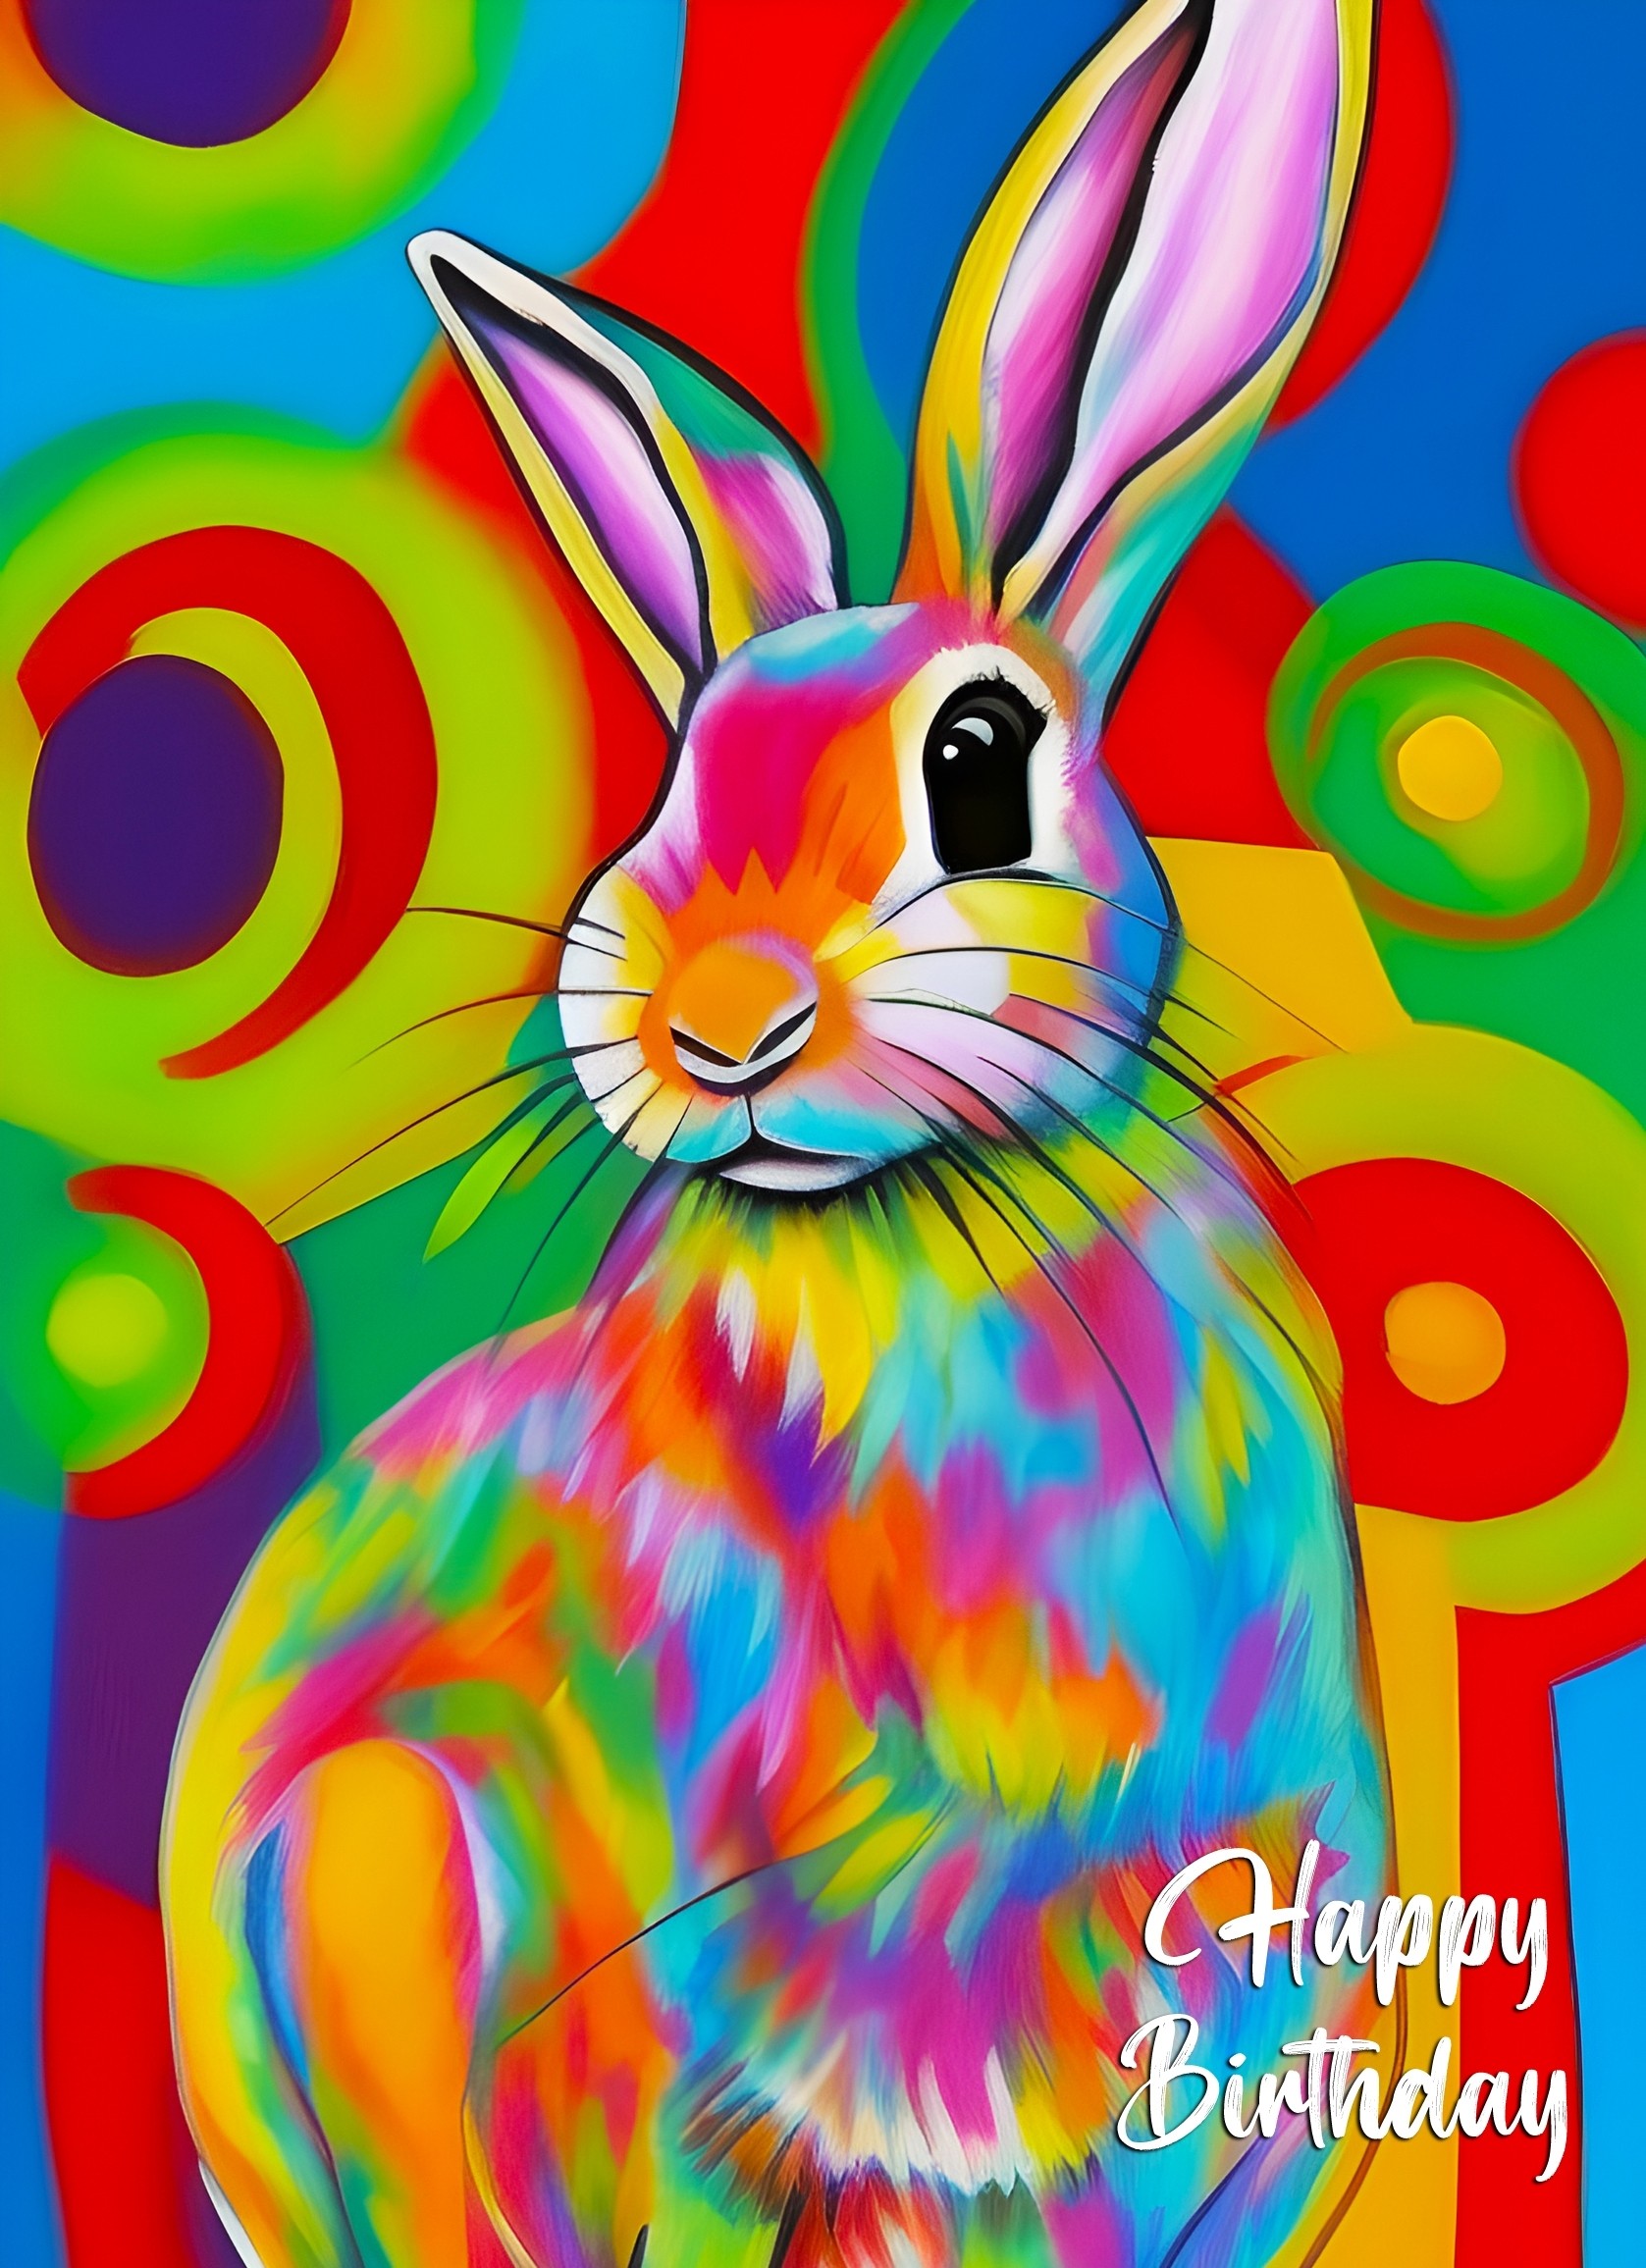 Rabbit Animal Colourful Abstract Art Birthday Card